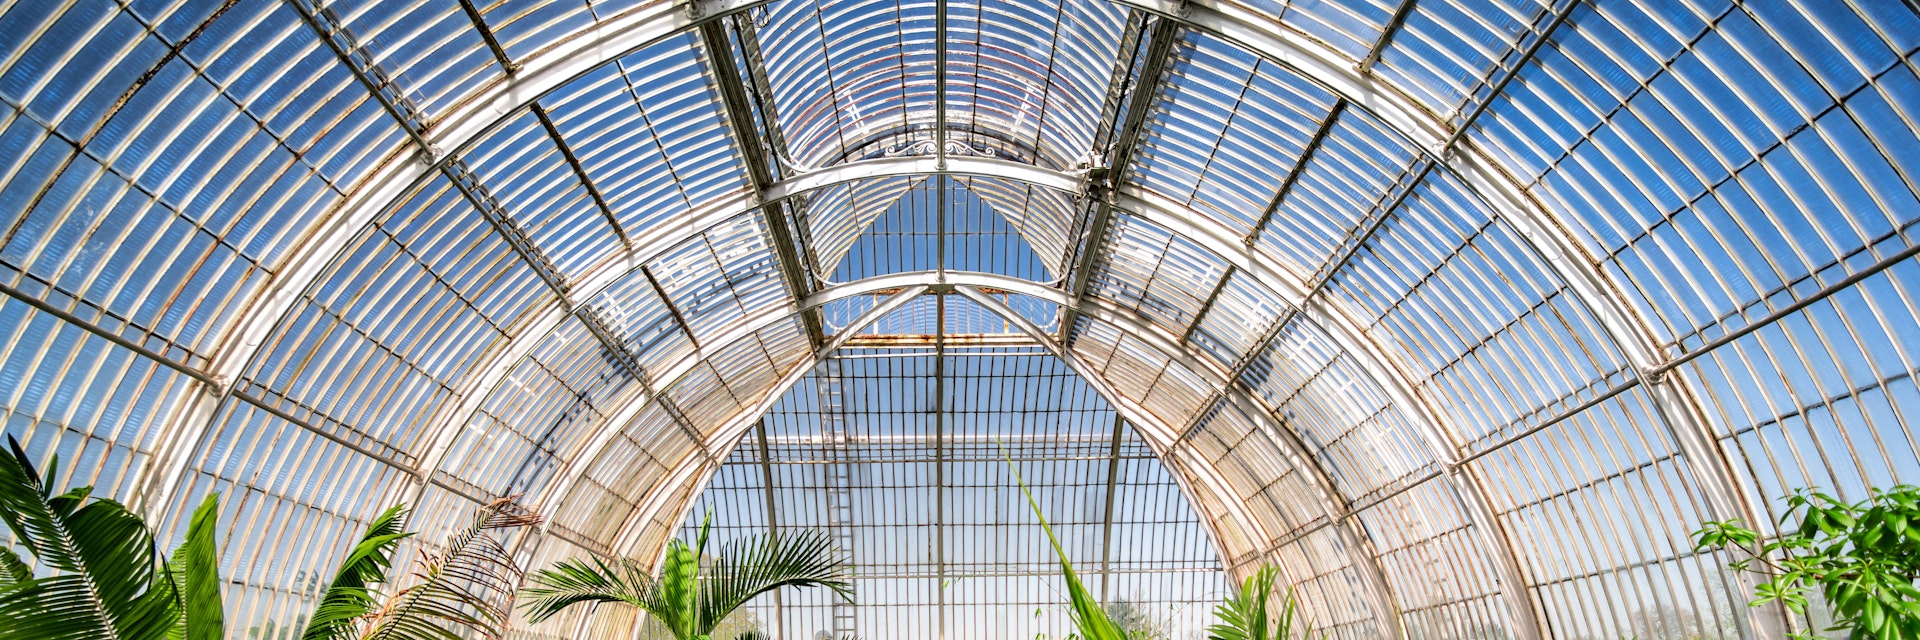 August 2017: Palm garden at a greenhouse in Kew Royal Botanic Gardens.